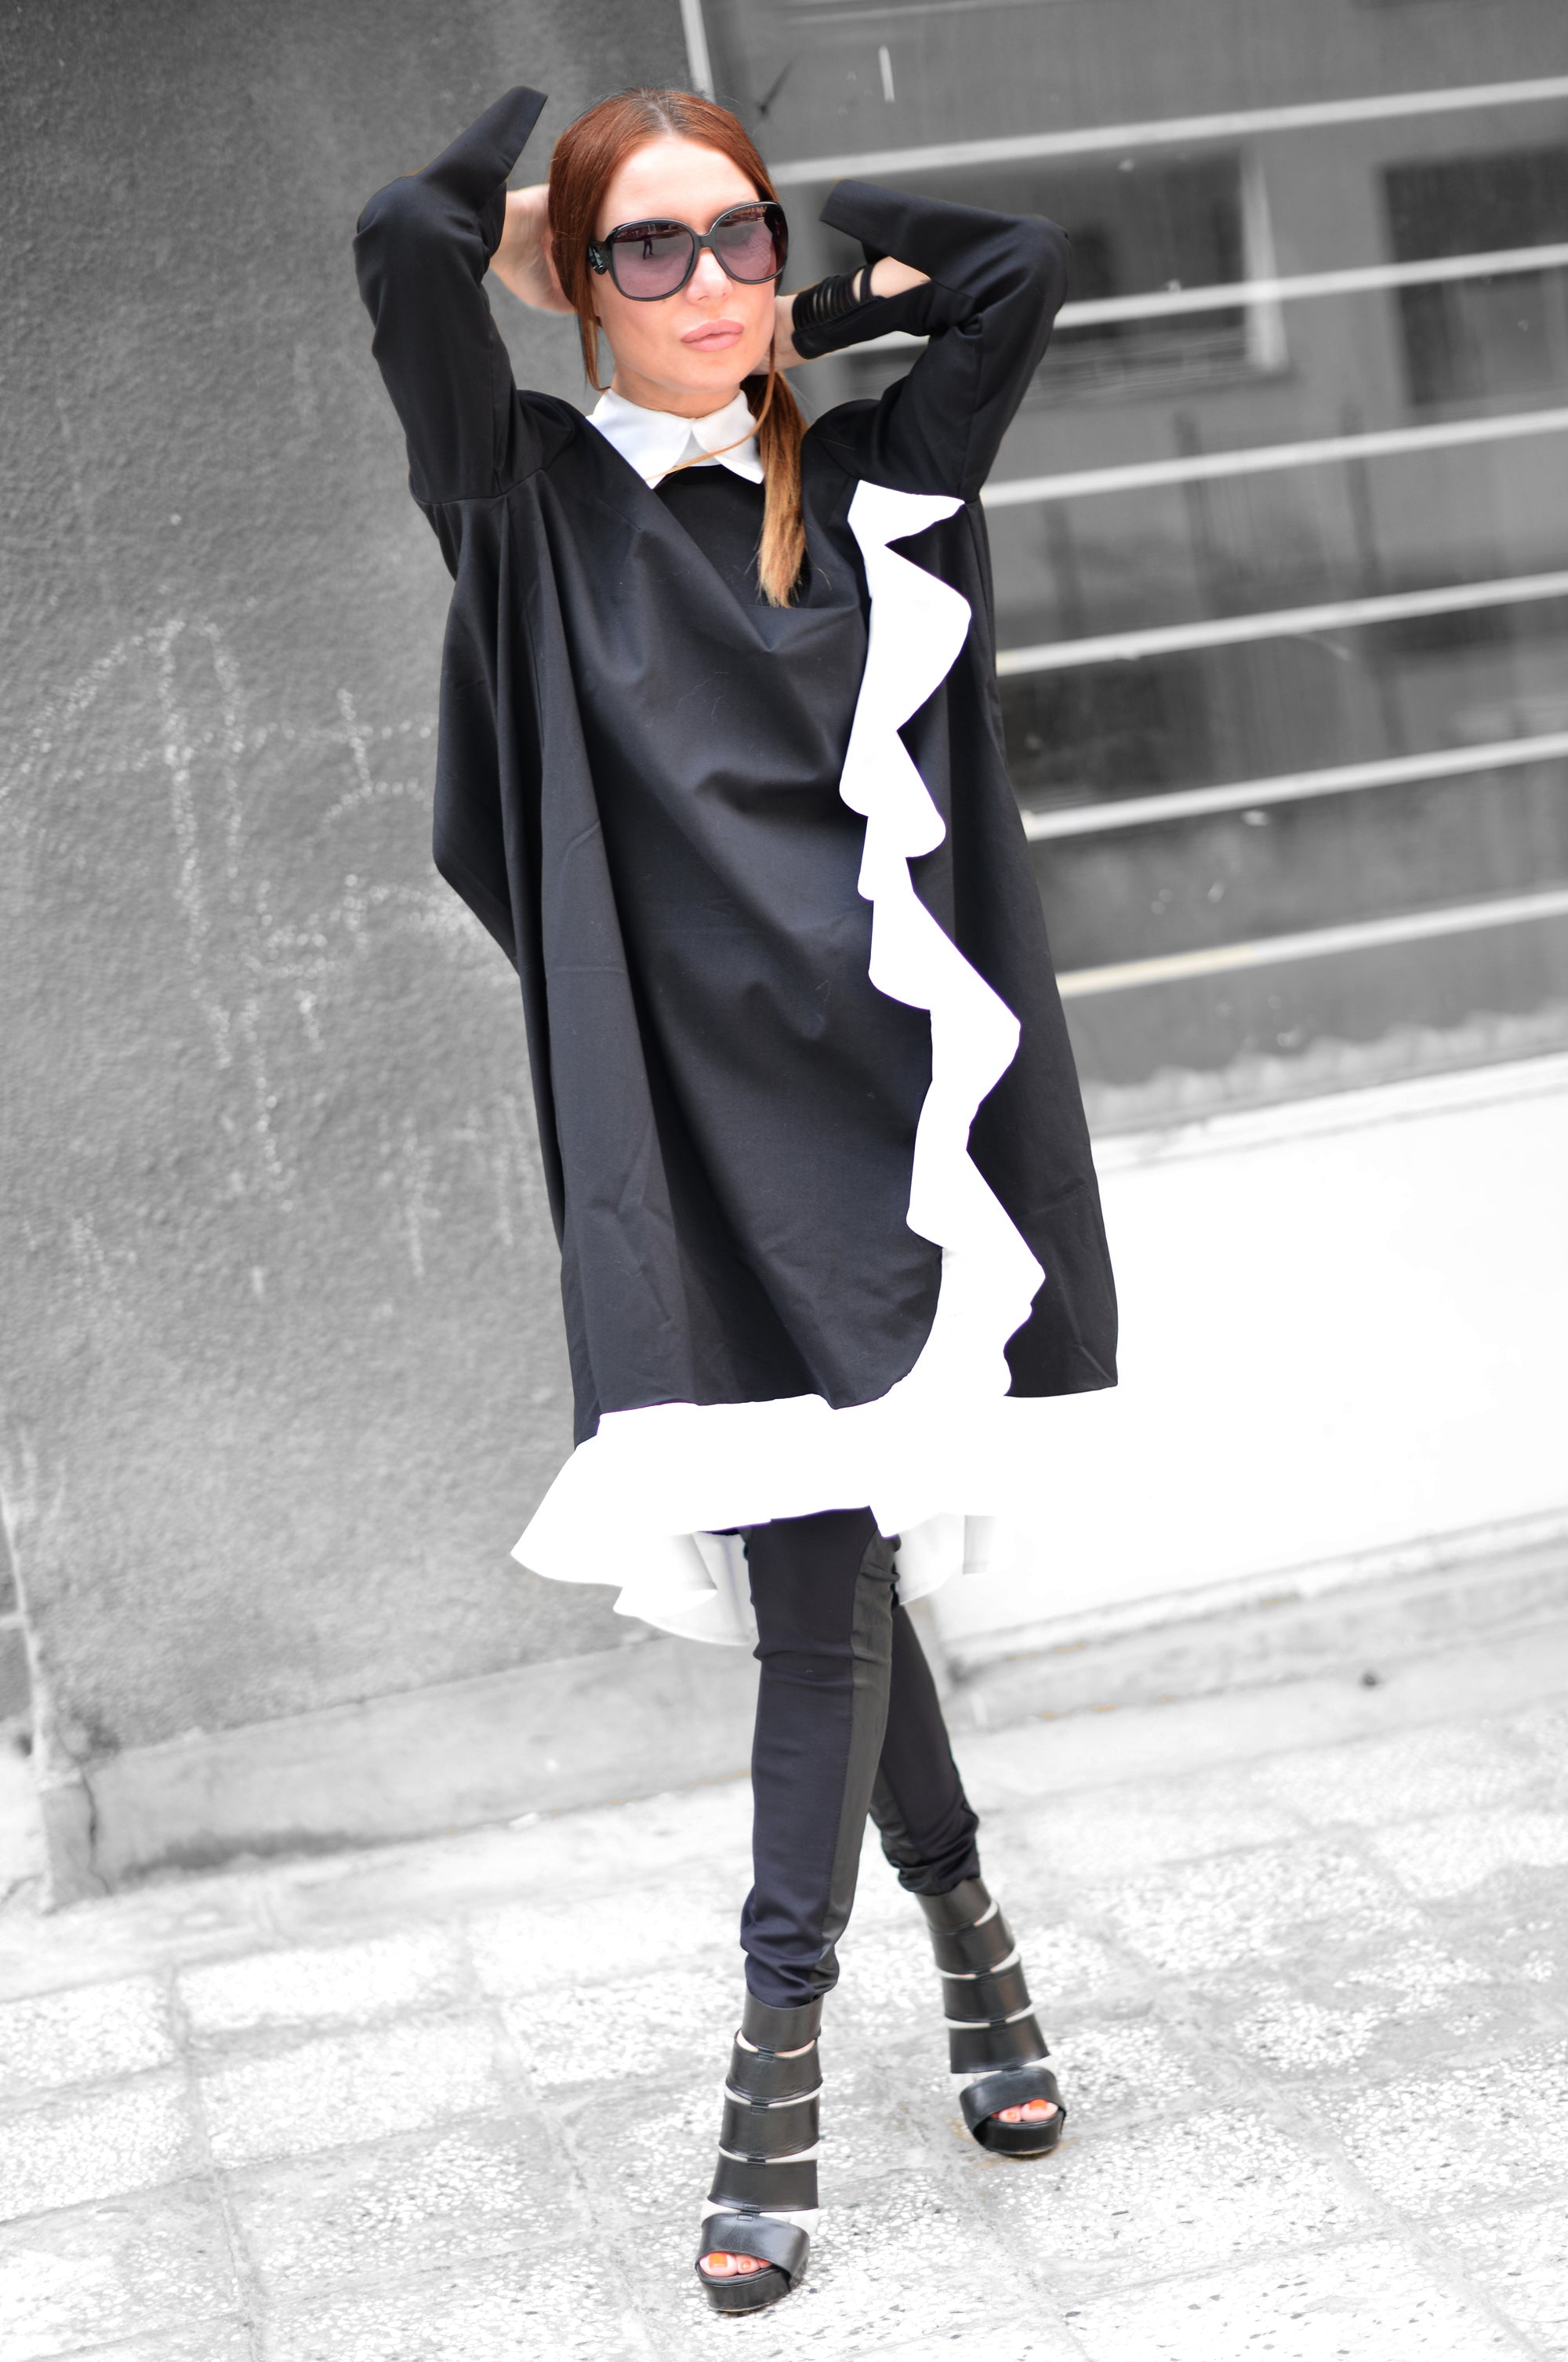 Black and White Ruffle Trendy Plus Size Dress by EUG Fashion